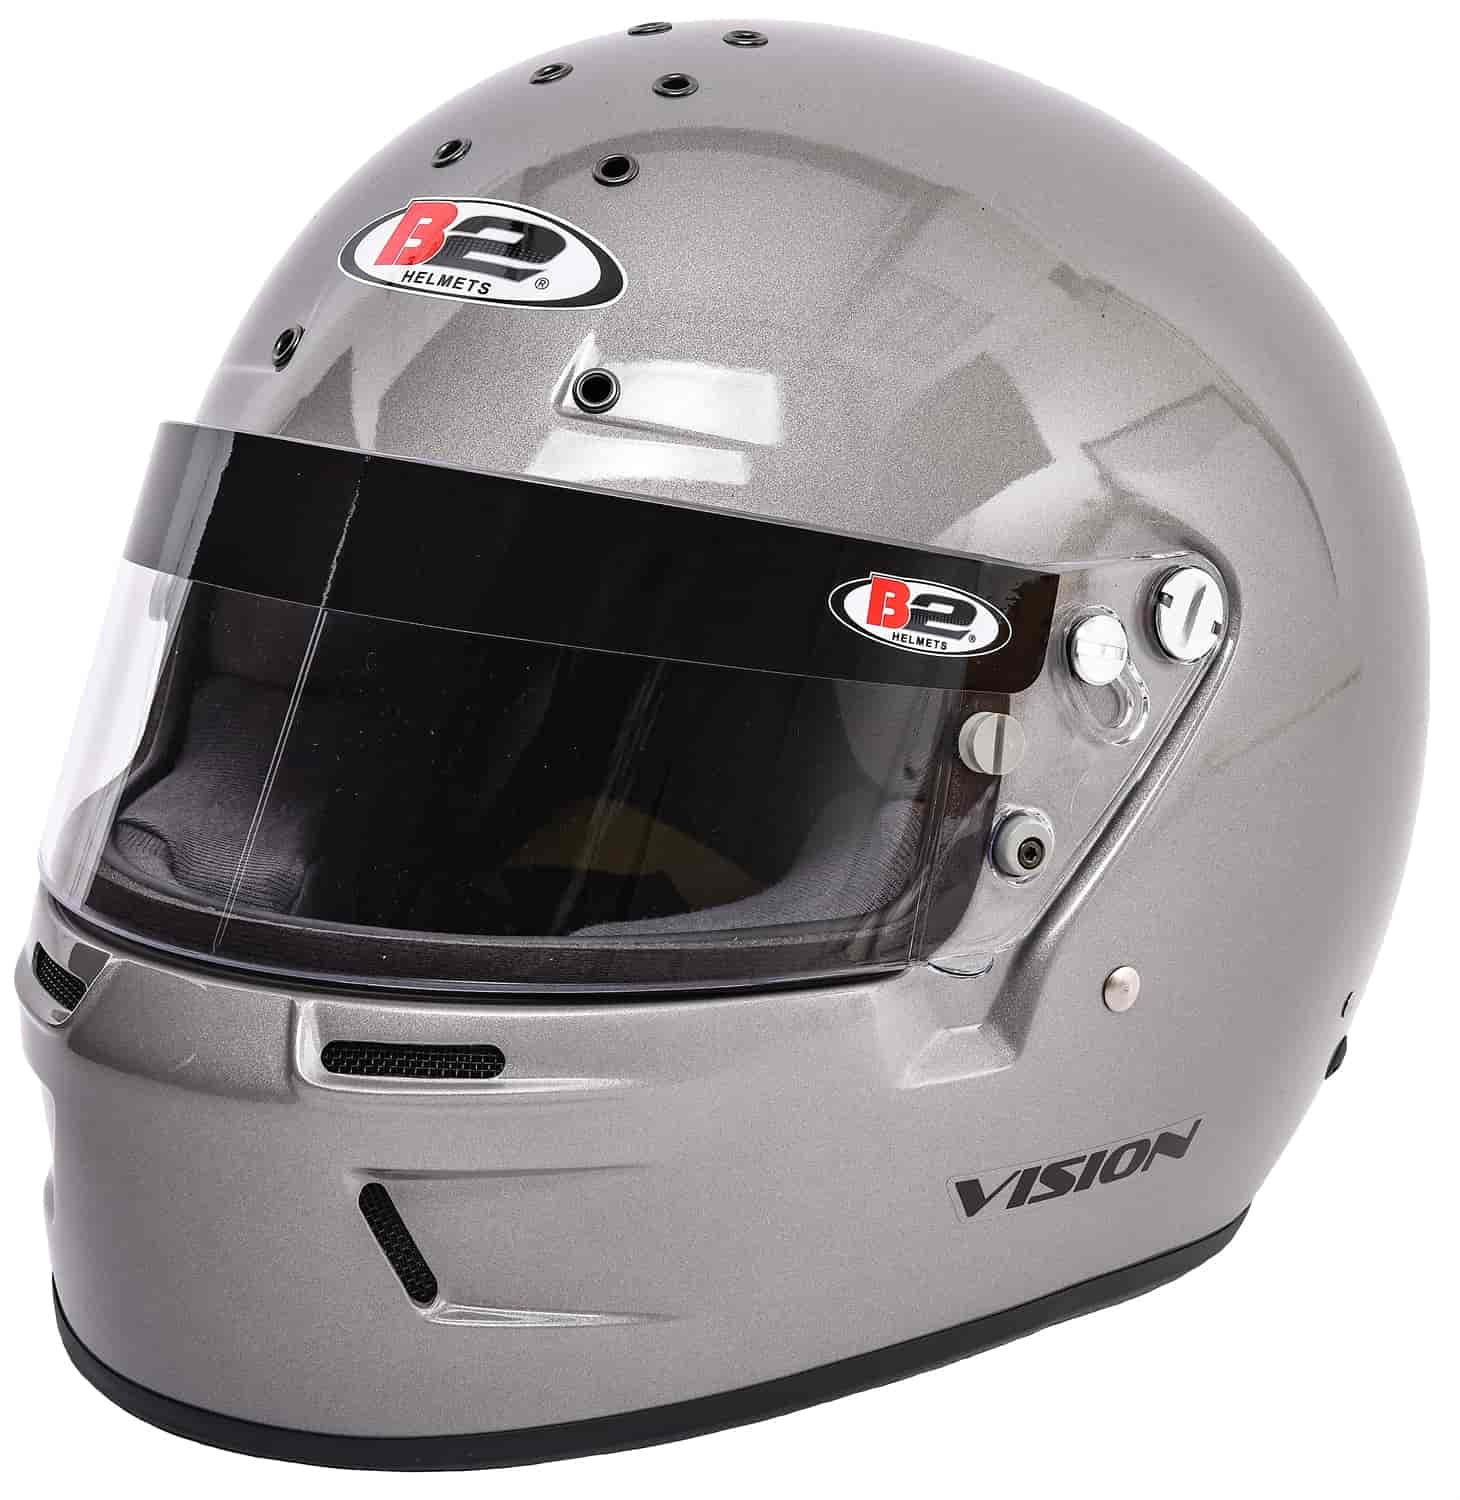 Vision Helmet Silver - Small